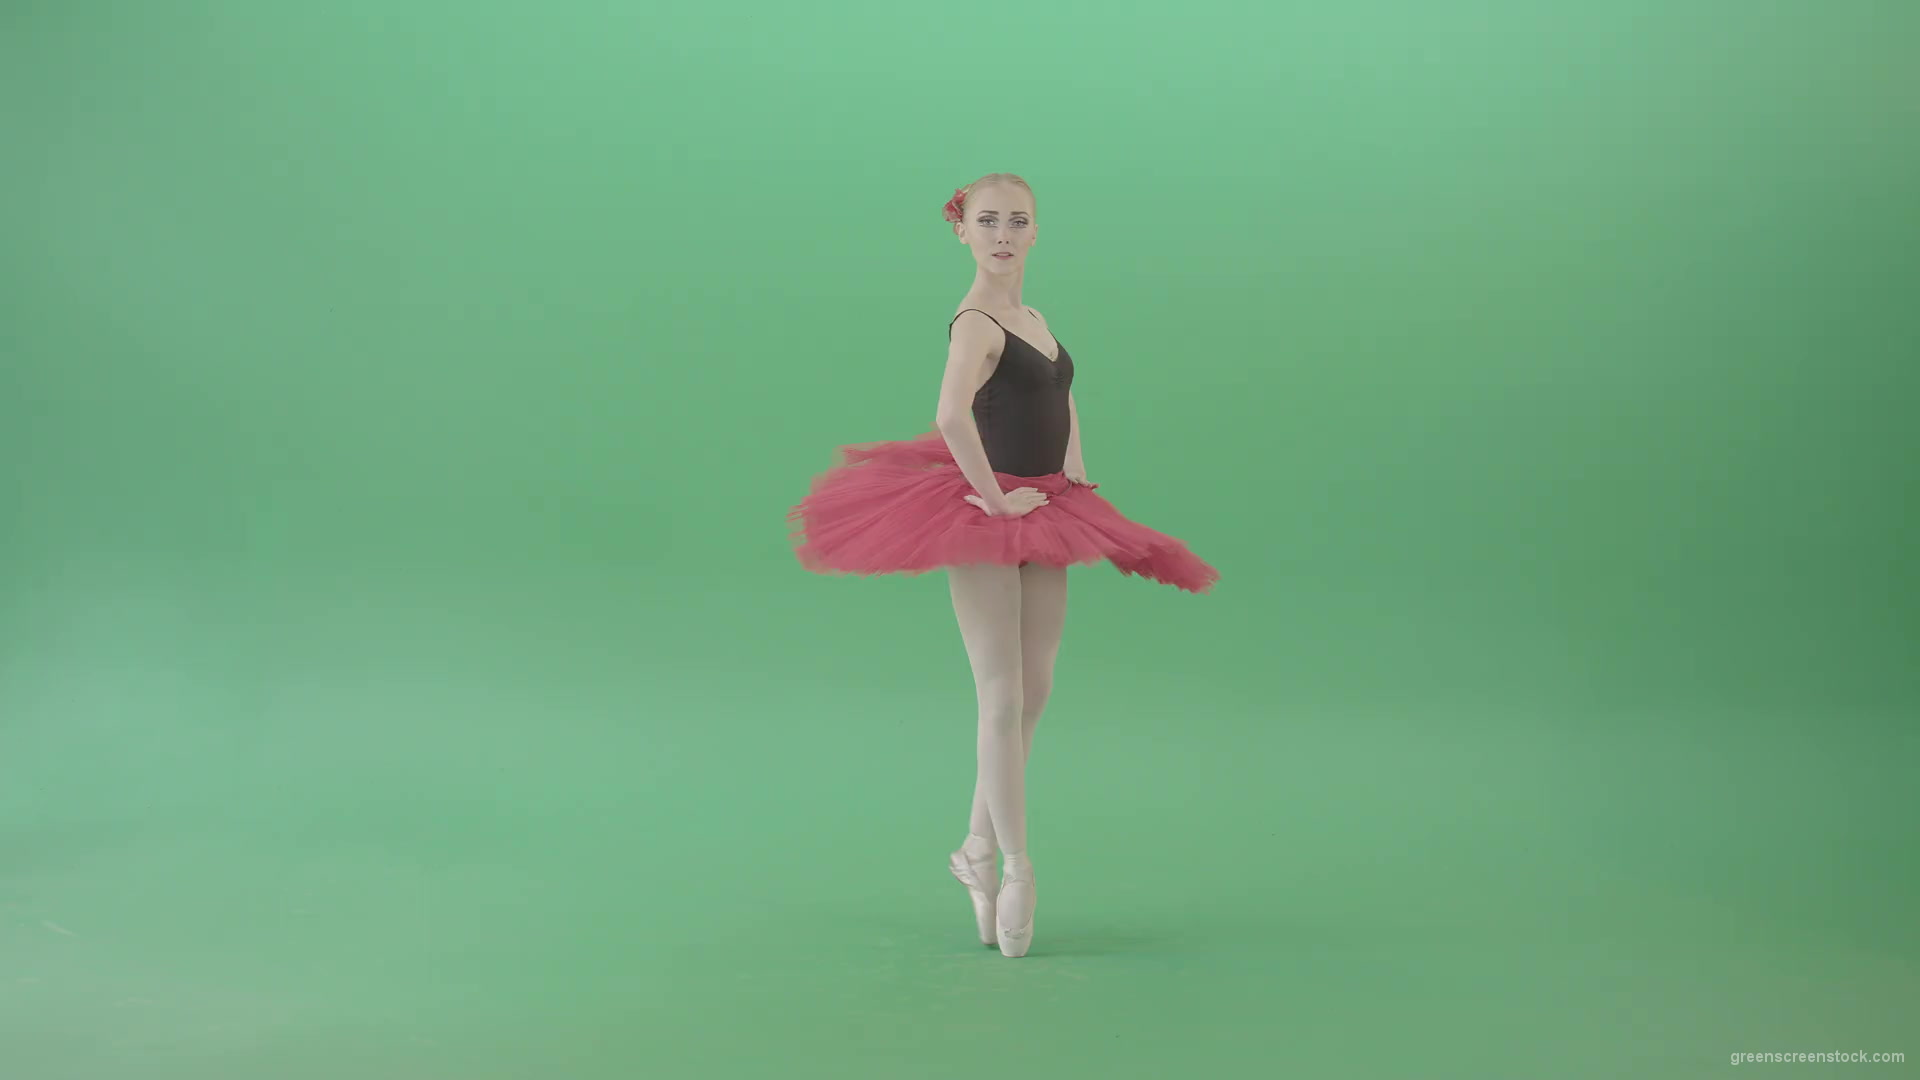 Happy-smiling-ballet-girl-ballerina-spinning-in-dance-on-green-screen-4K-Video-Footage-1920_001 Green Screen Stock